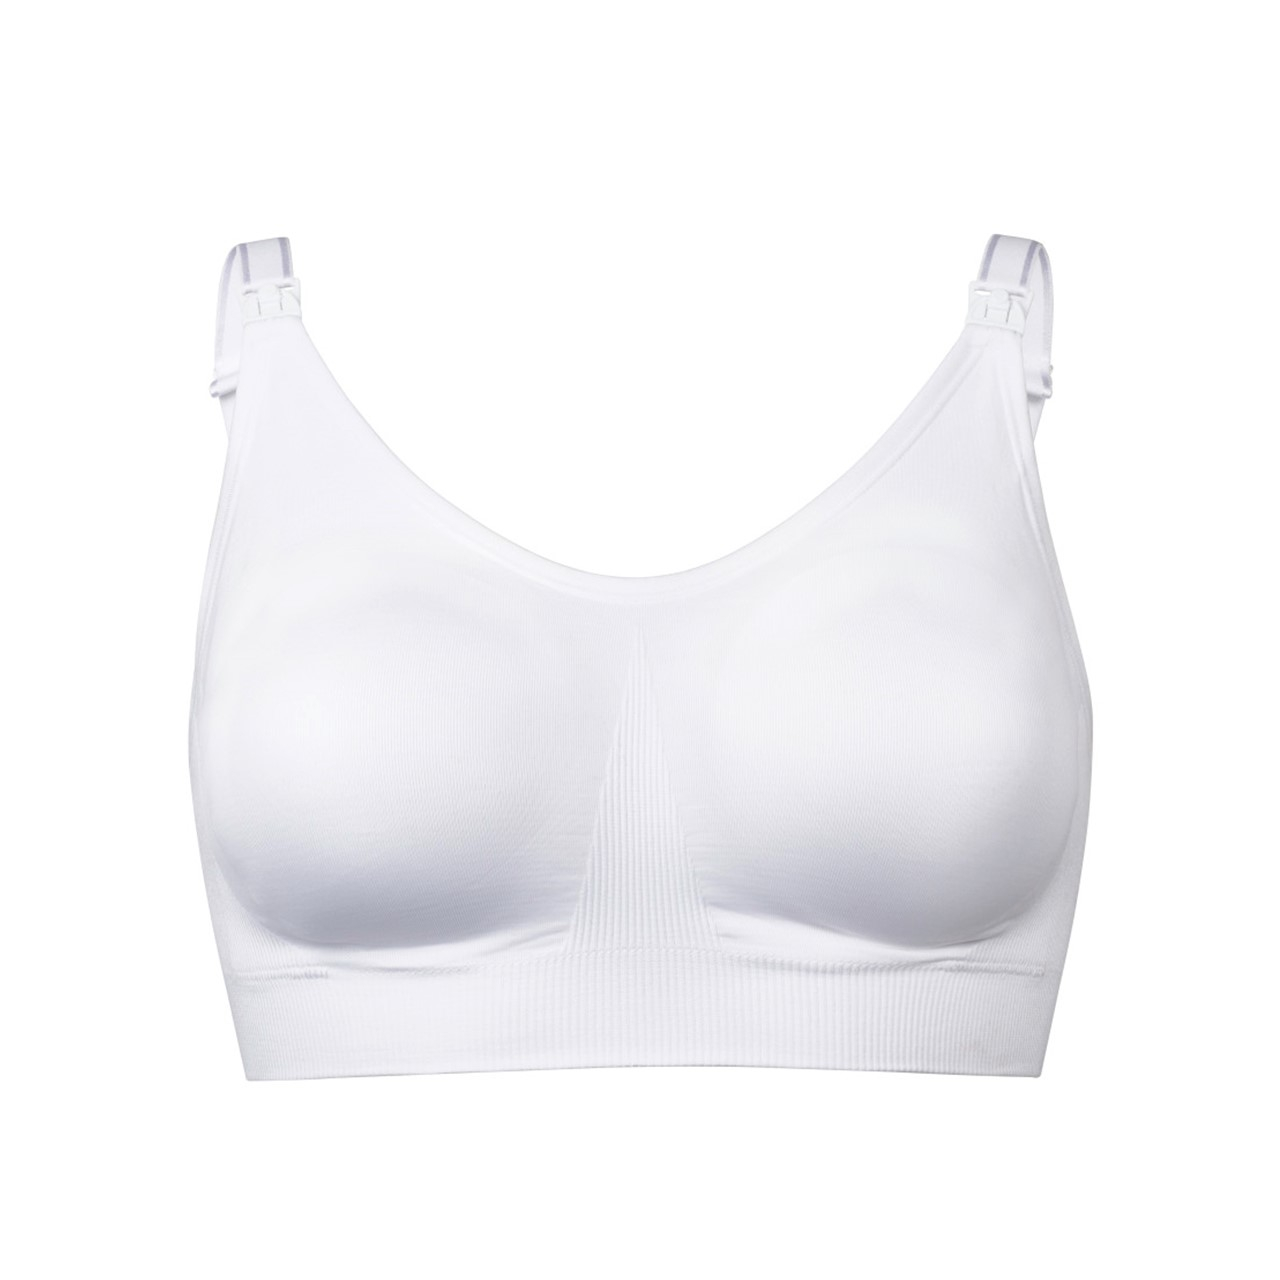 https://static.beautytocare.com/media/catalog/product/m/e/medela-ultimate-bodyfit-bra-white-extra-large-size-x1_1.jpg